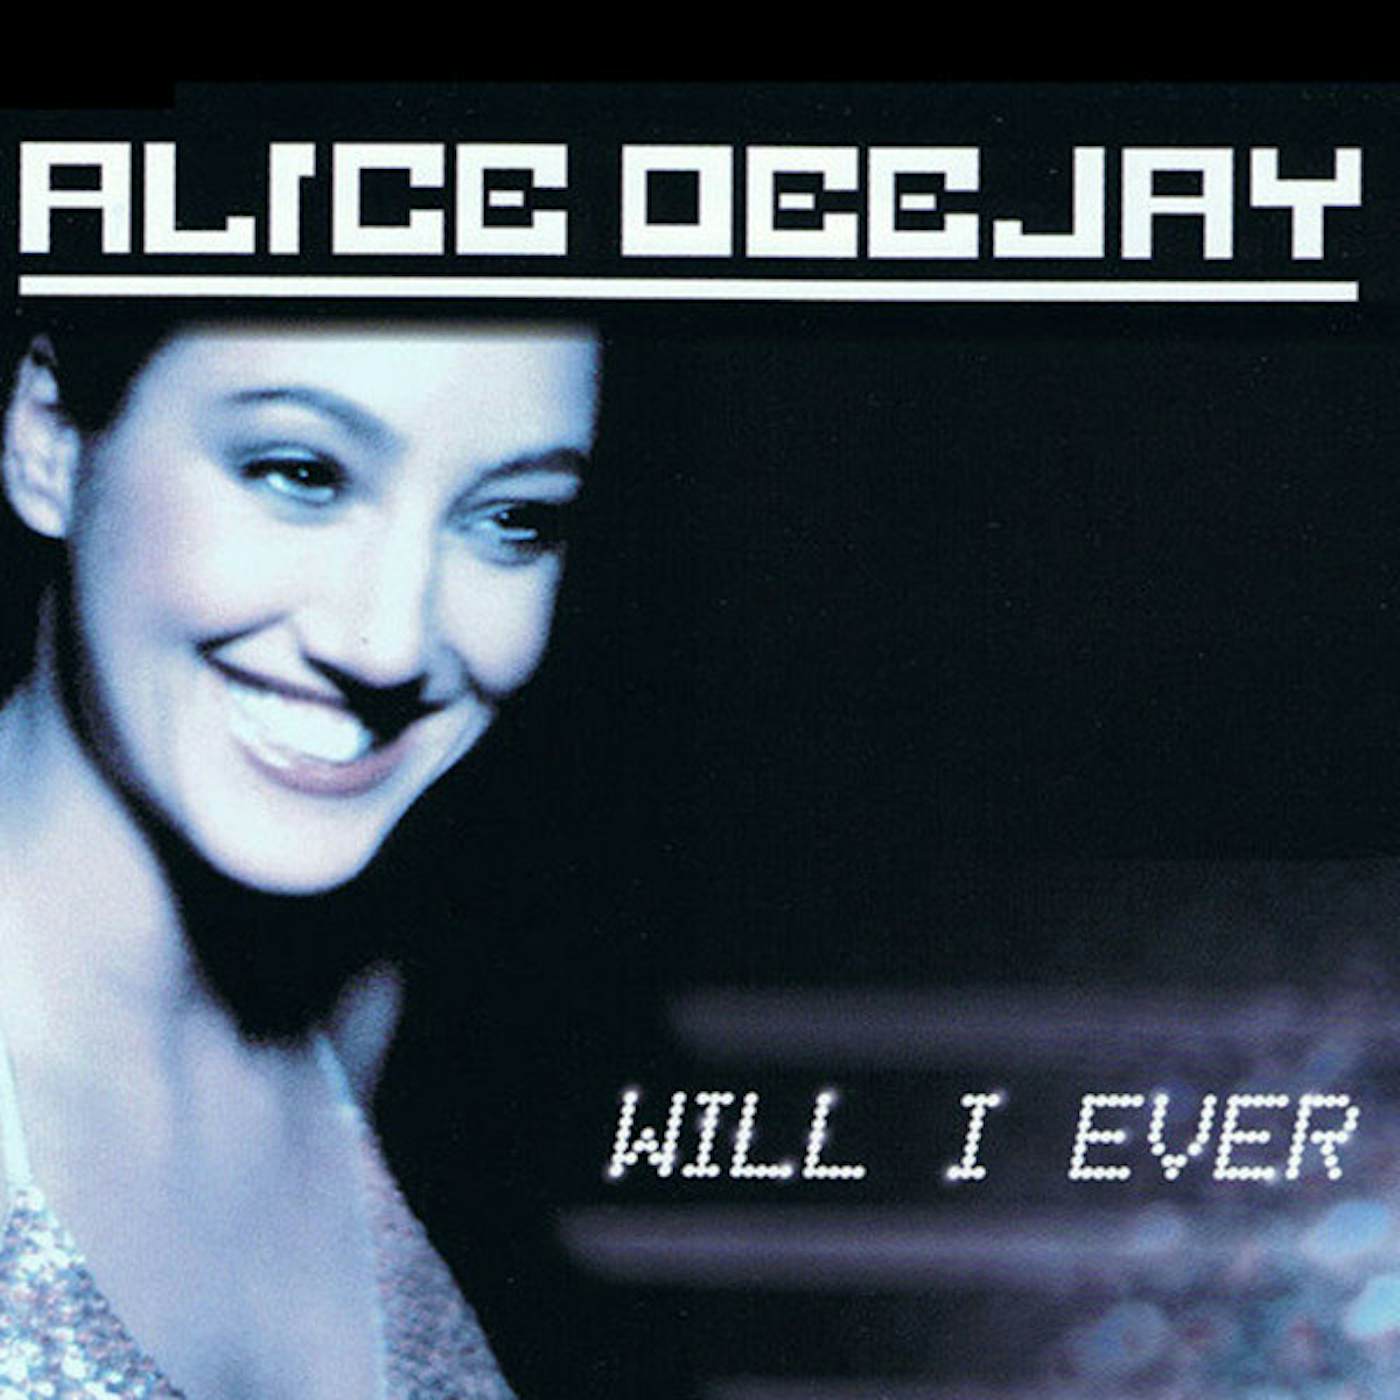 Alice Deejay Will I Ever Vinyl Record